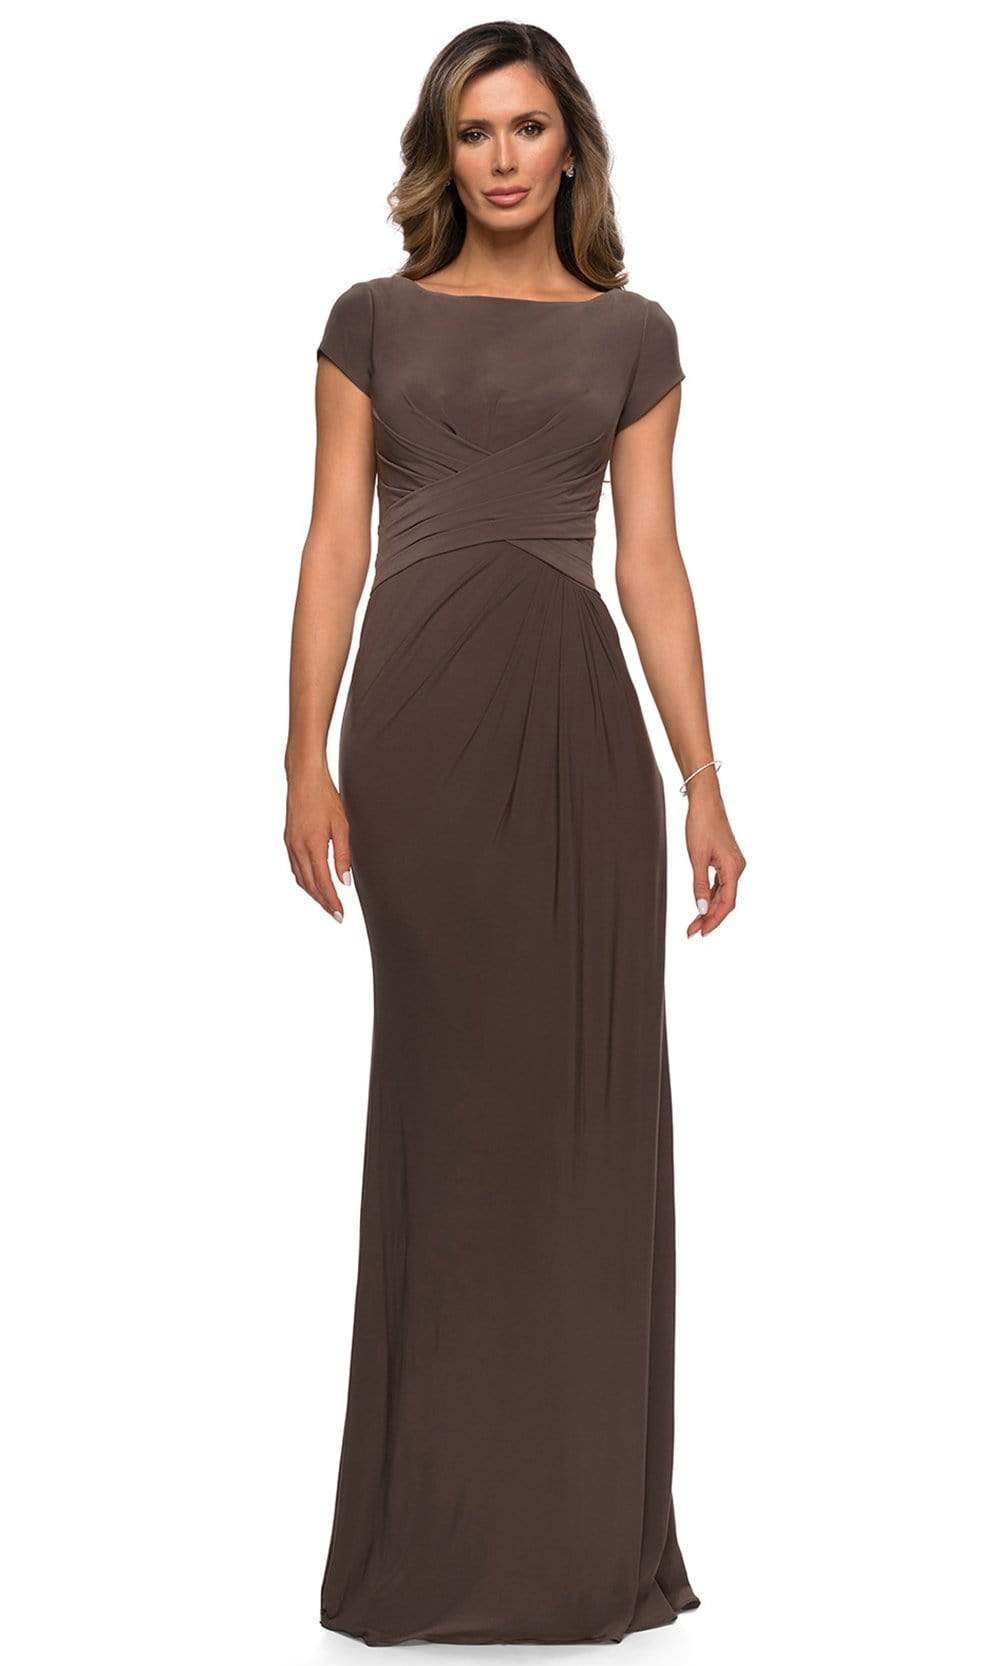 La Femme - Cap Sleeve Cross Draped Jersey Dress 28026SC CCSALE 14 / Cocoa